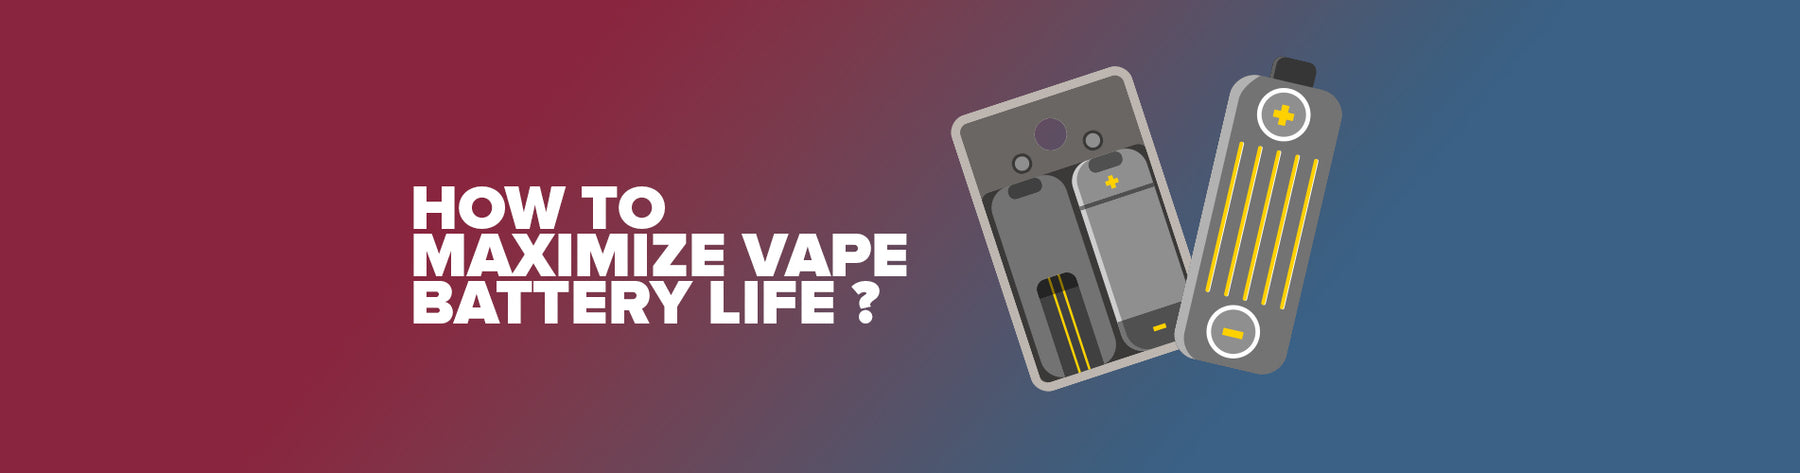 How to Maximize Vape Battery Life?